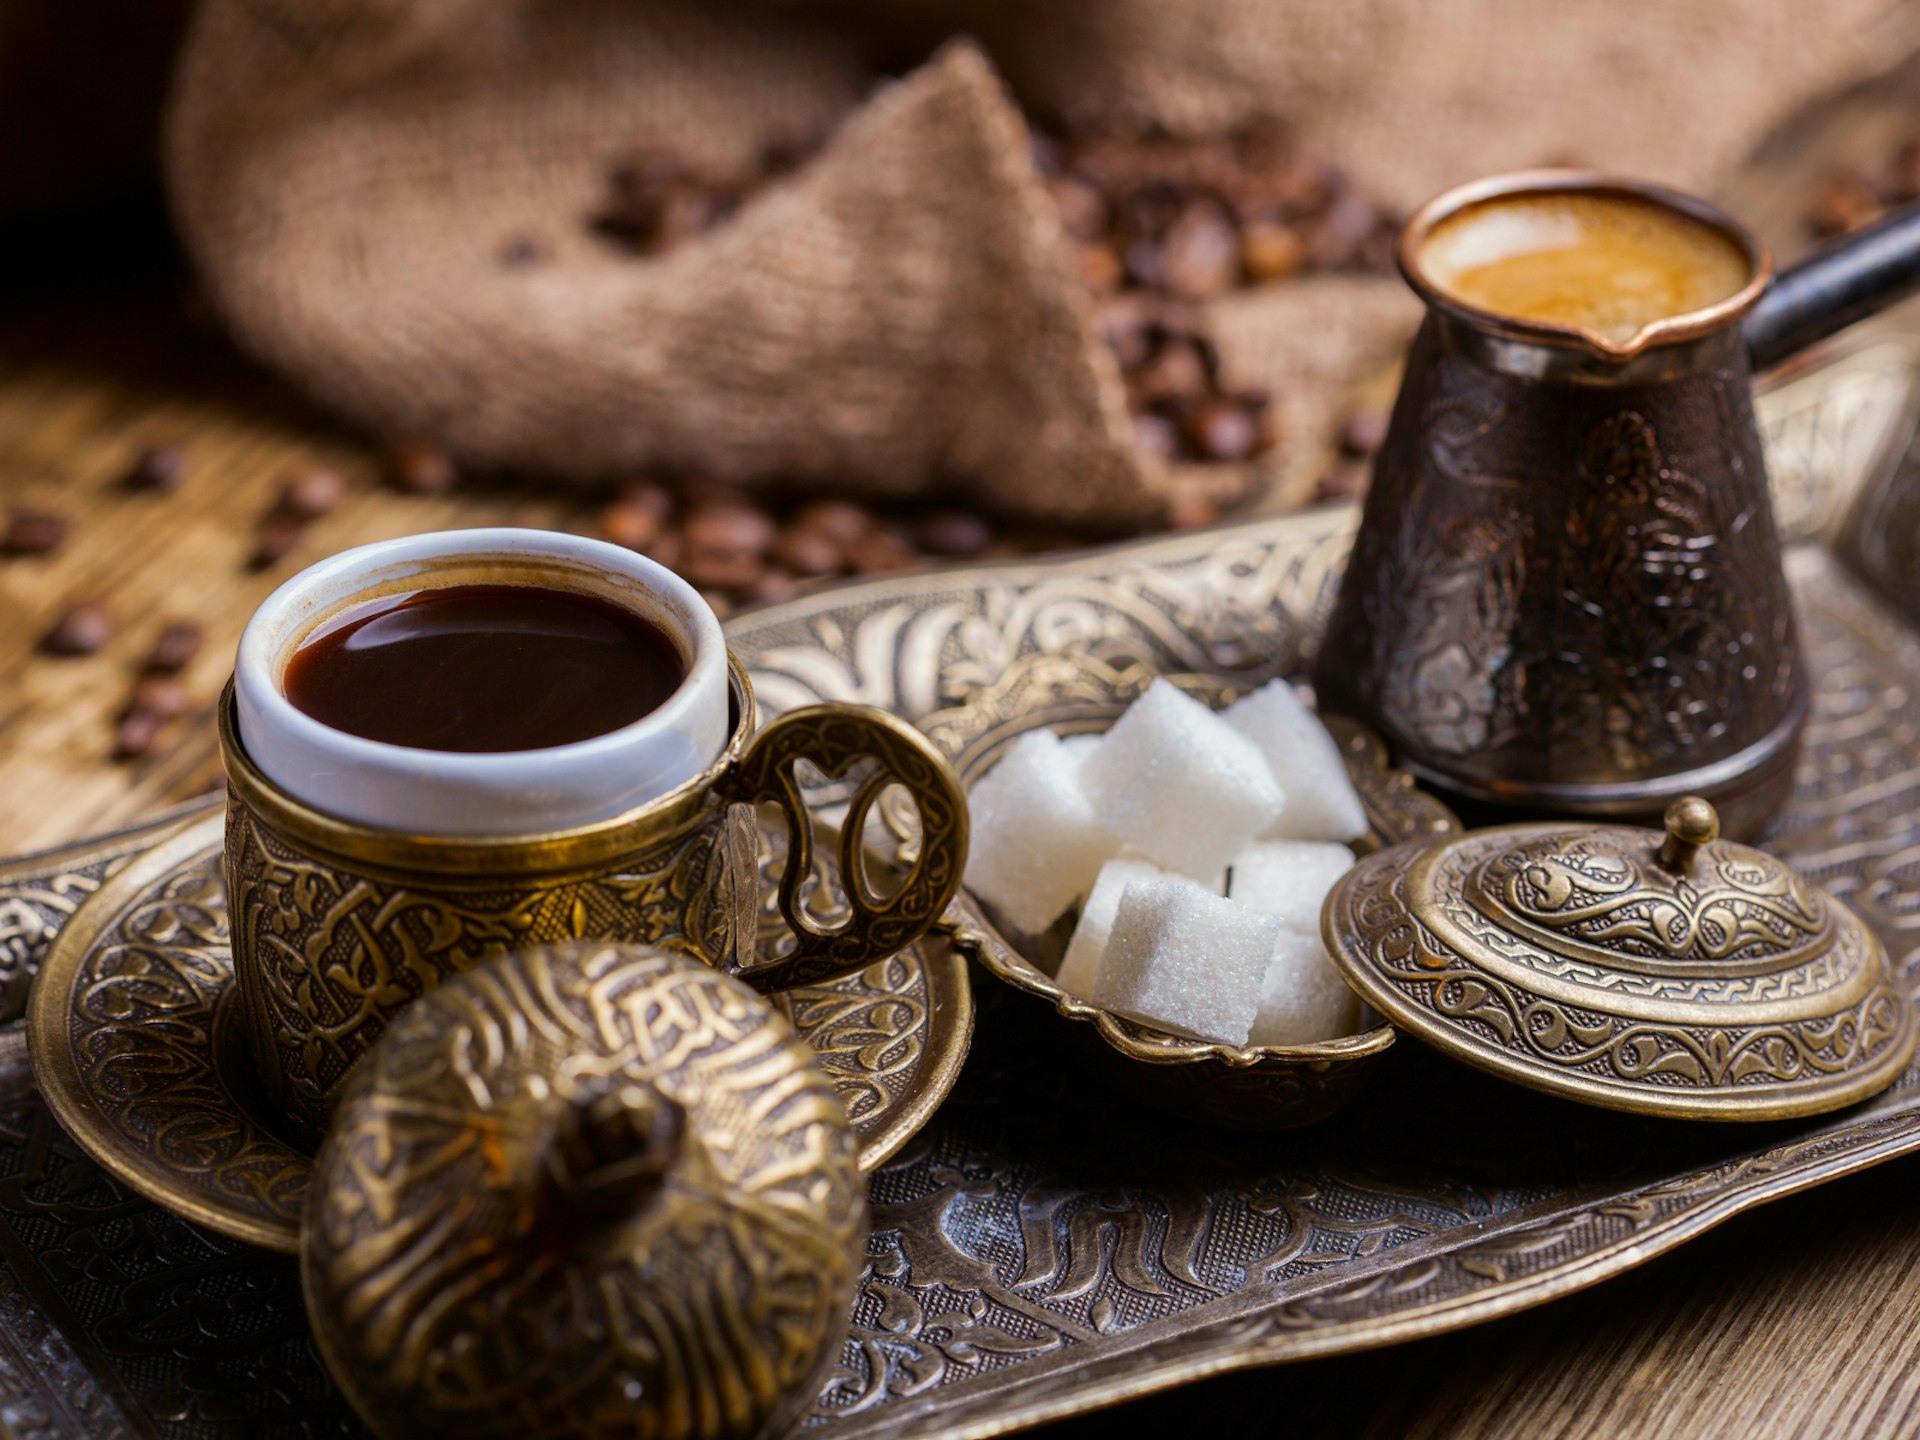 A traditional Turkish coffee set